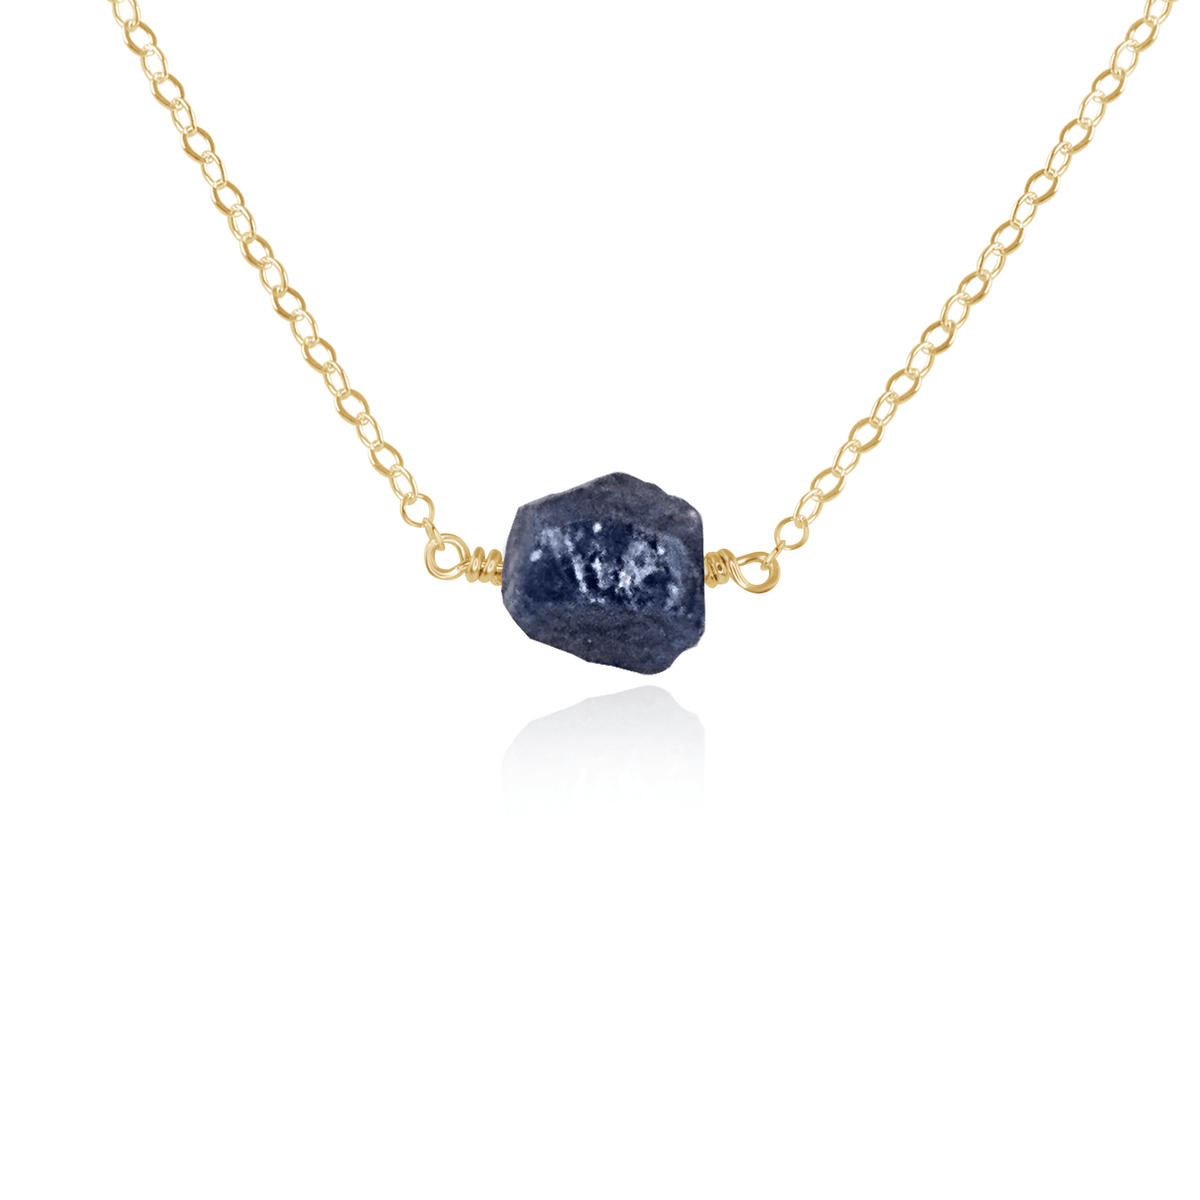 Tiny Raw Sapphire Crystal Nugget Necklace - Tiny Raw Sapphire Crystal Nugget Necklace - 14k Gold Fill - Luna Tide Handmade Crystal Jewellery